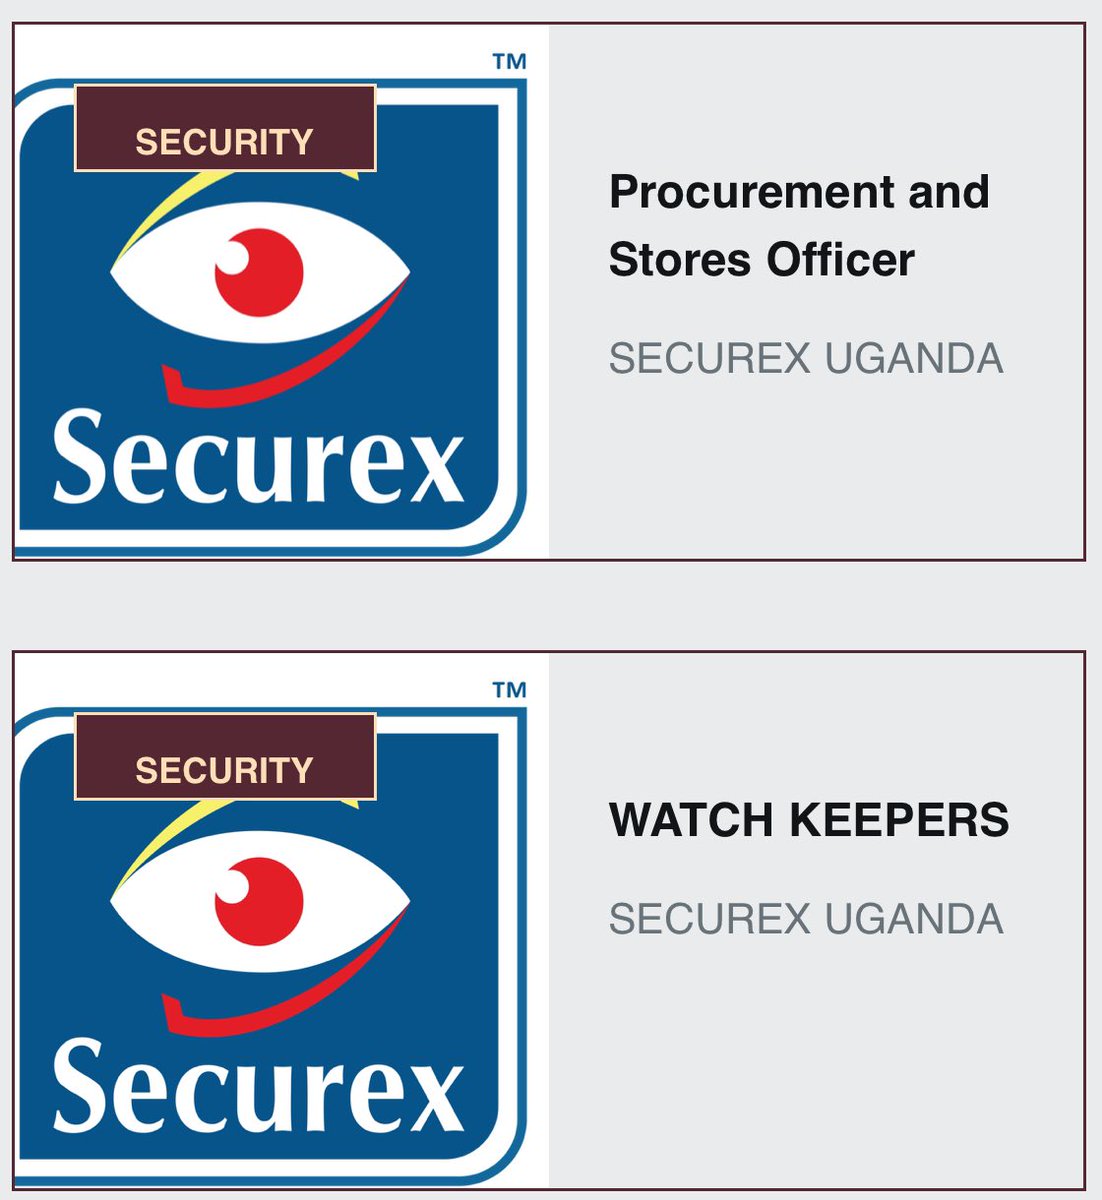 Securex Uganda is hiring! - Watch Keepers: jobnotices.ug/job/watch-keep… - Procurement & Store Officer: jobnotices.ug/job/procuremen…